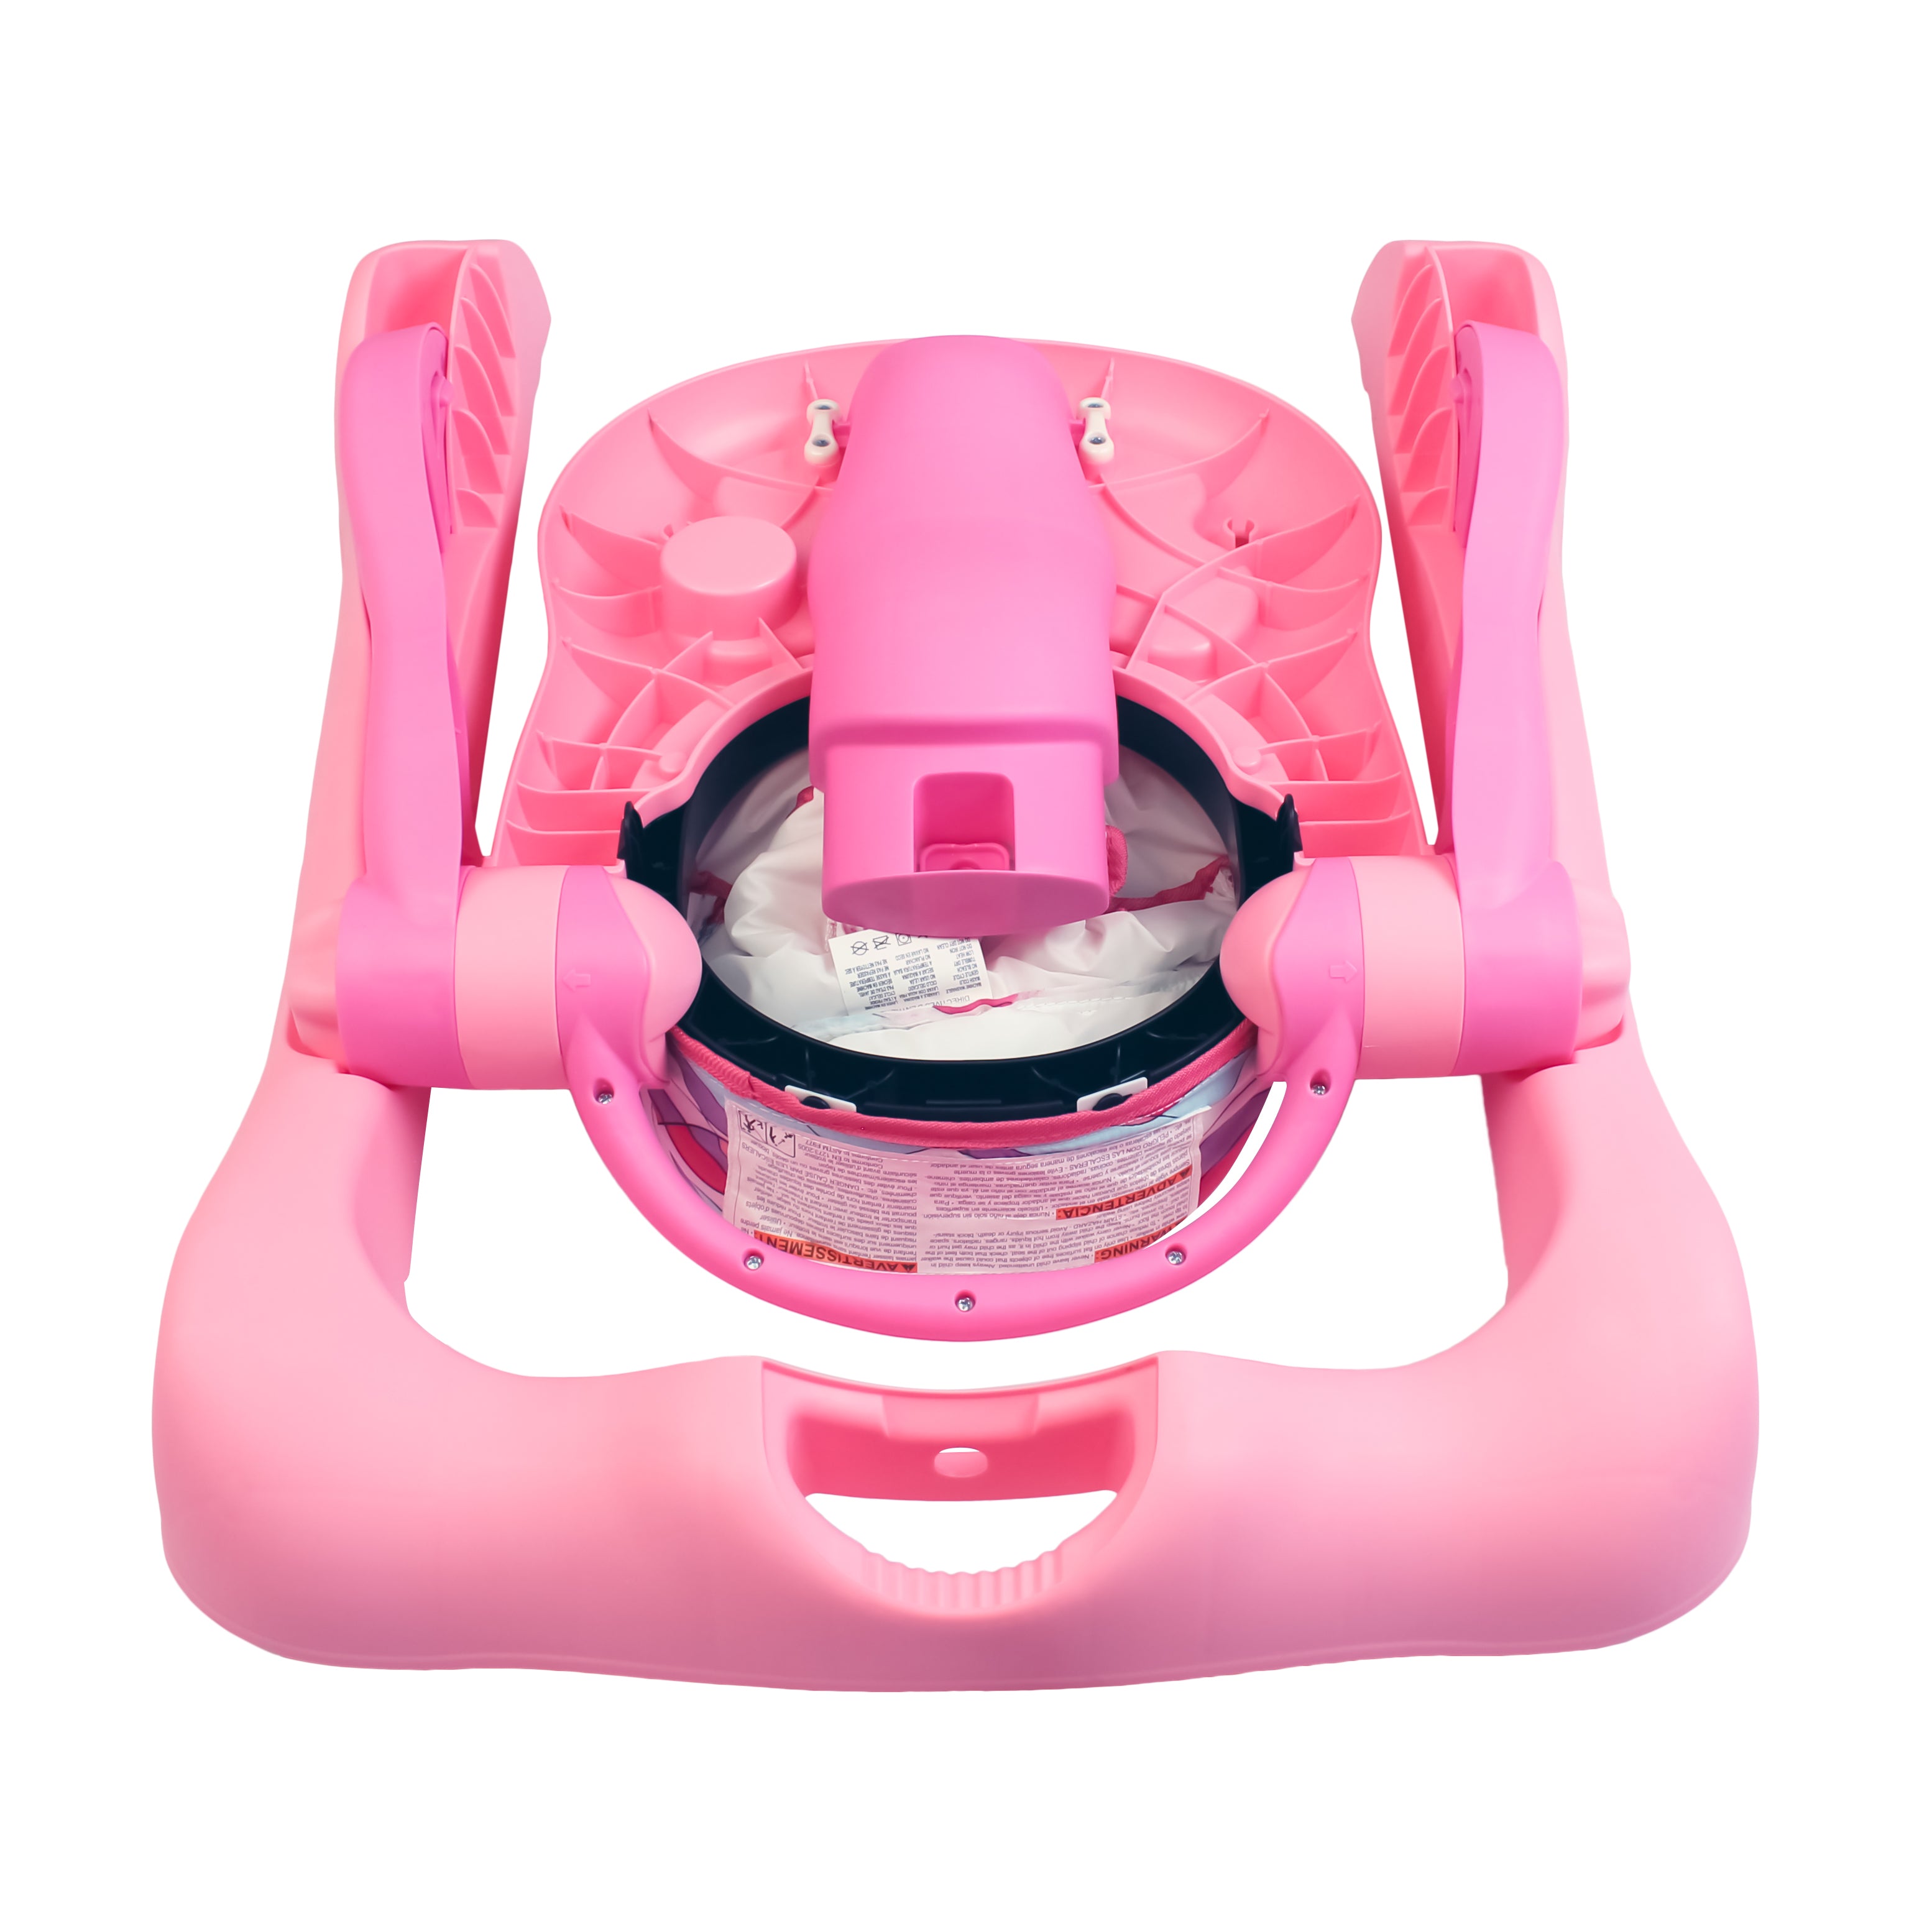 Creative Baby Footsie Walker (Pink)